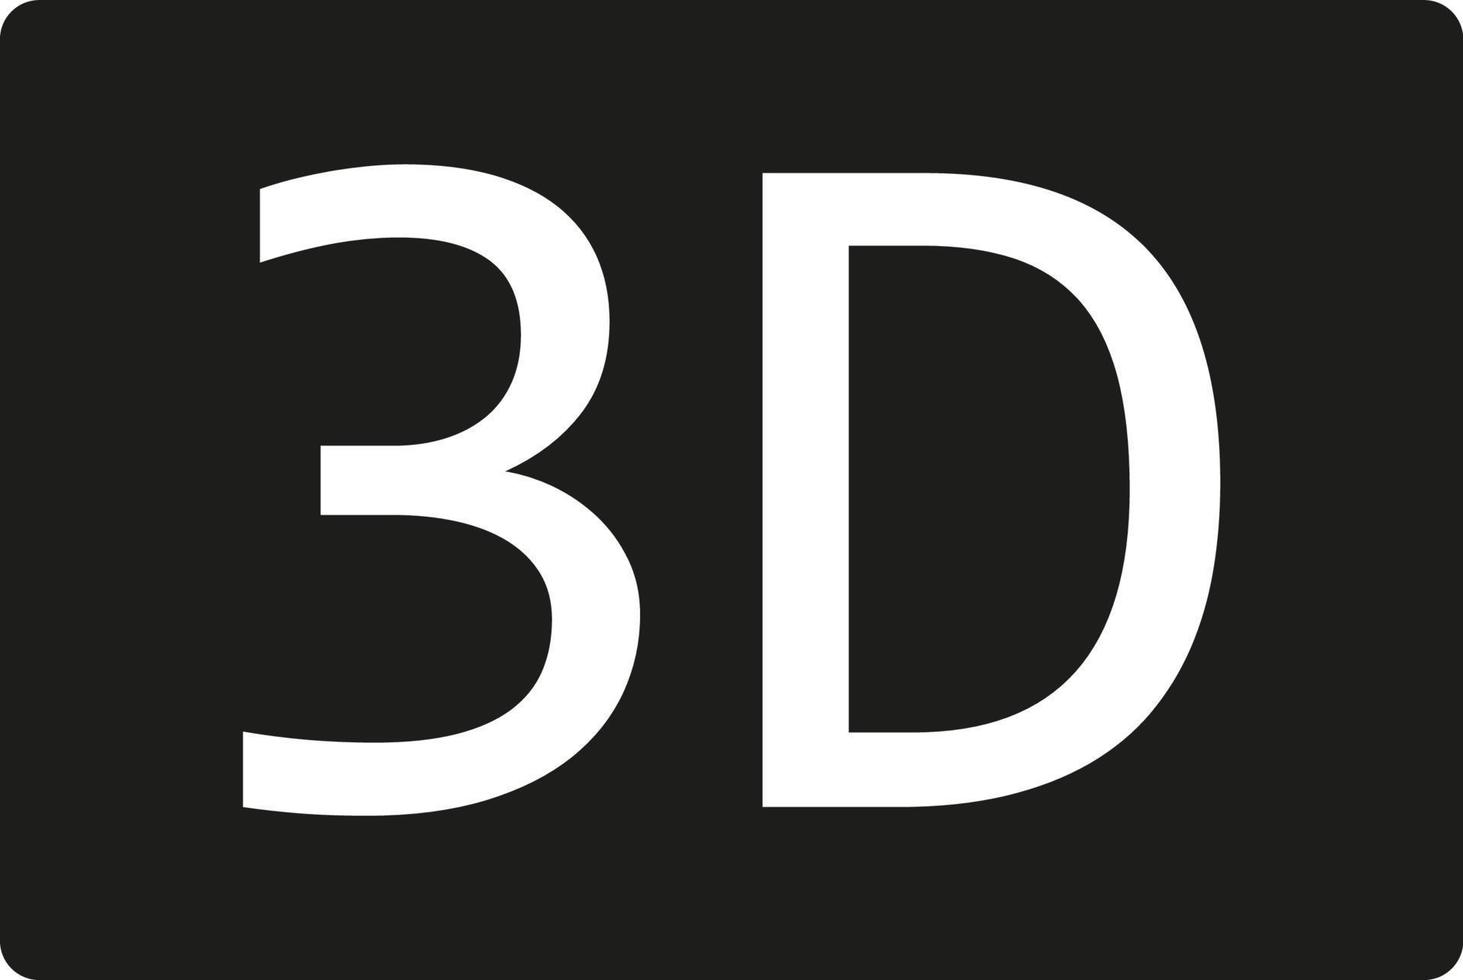 3D Print vector icon - 3d cube Printing symbol